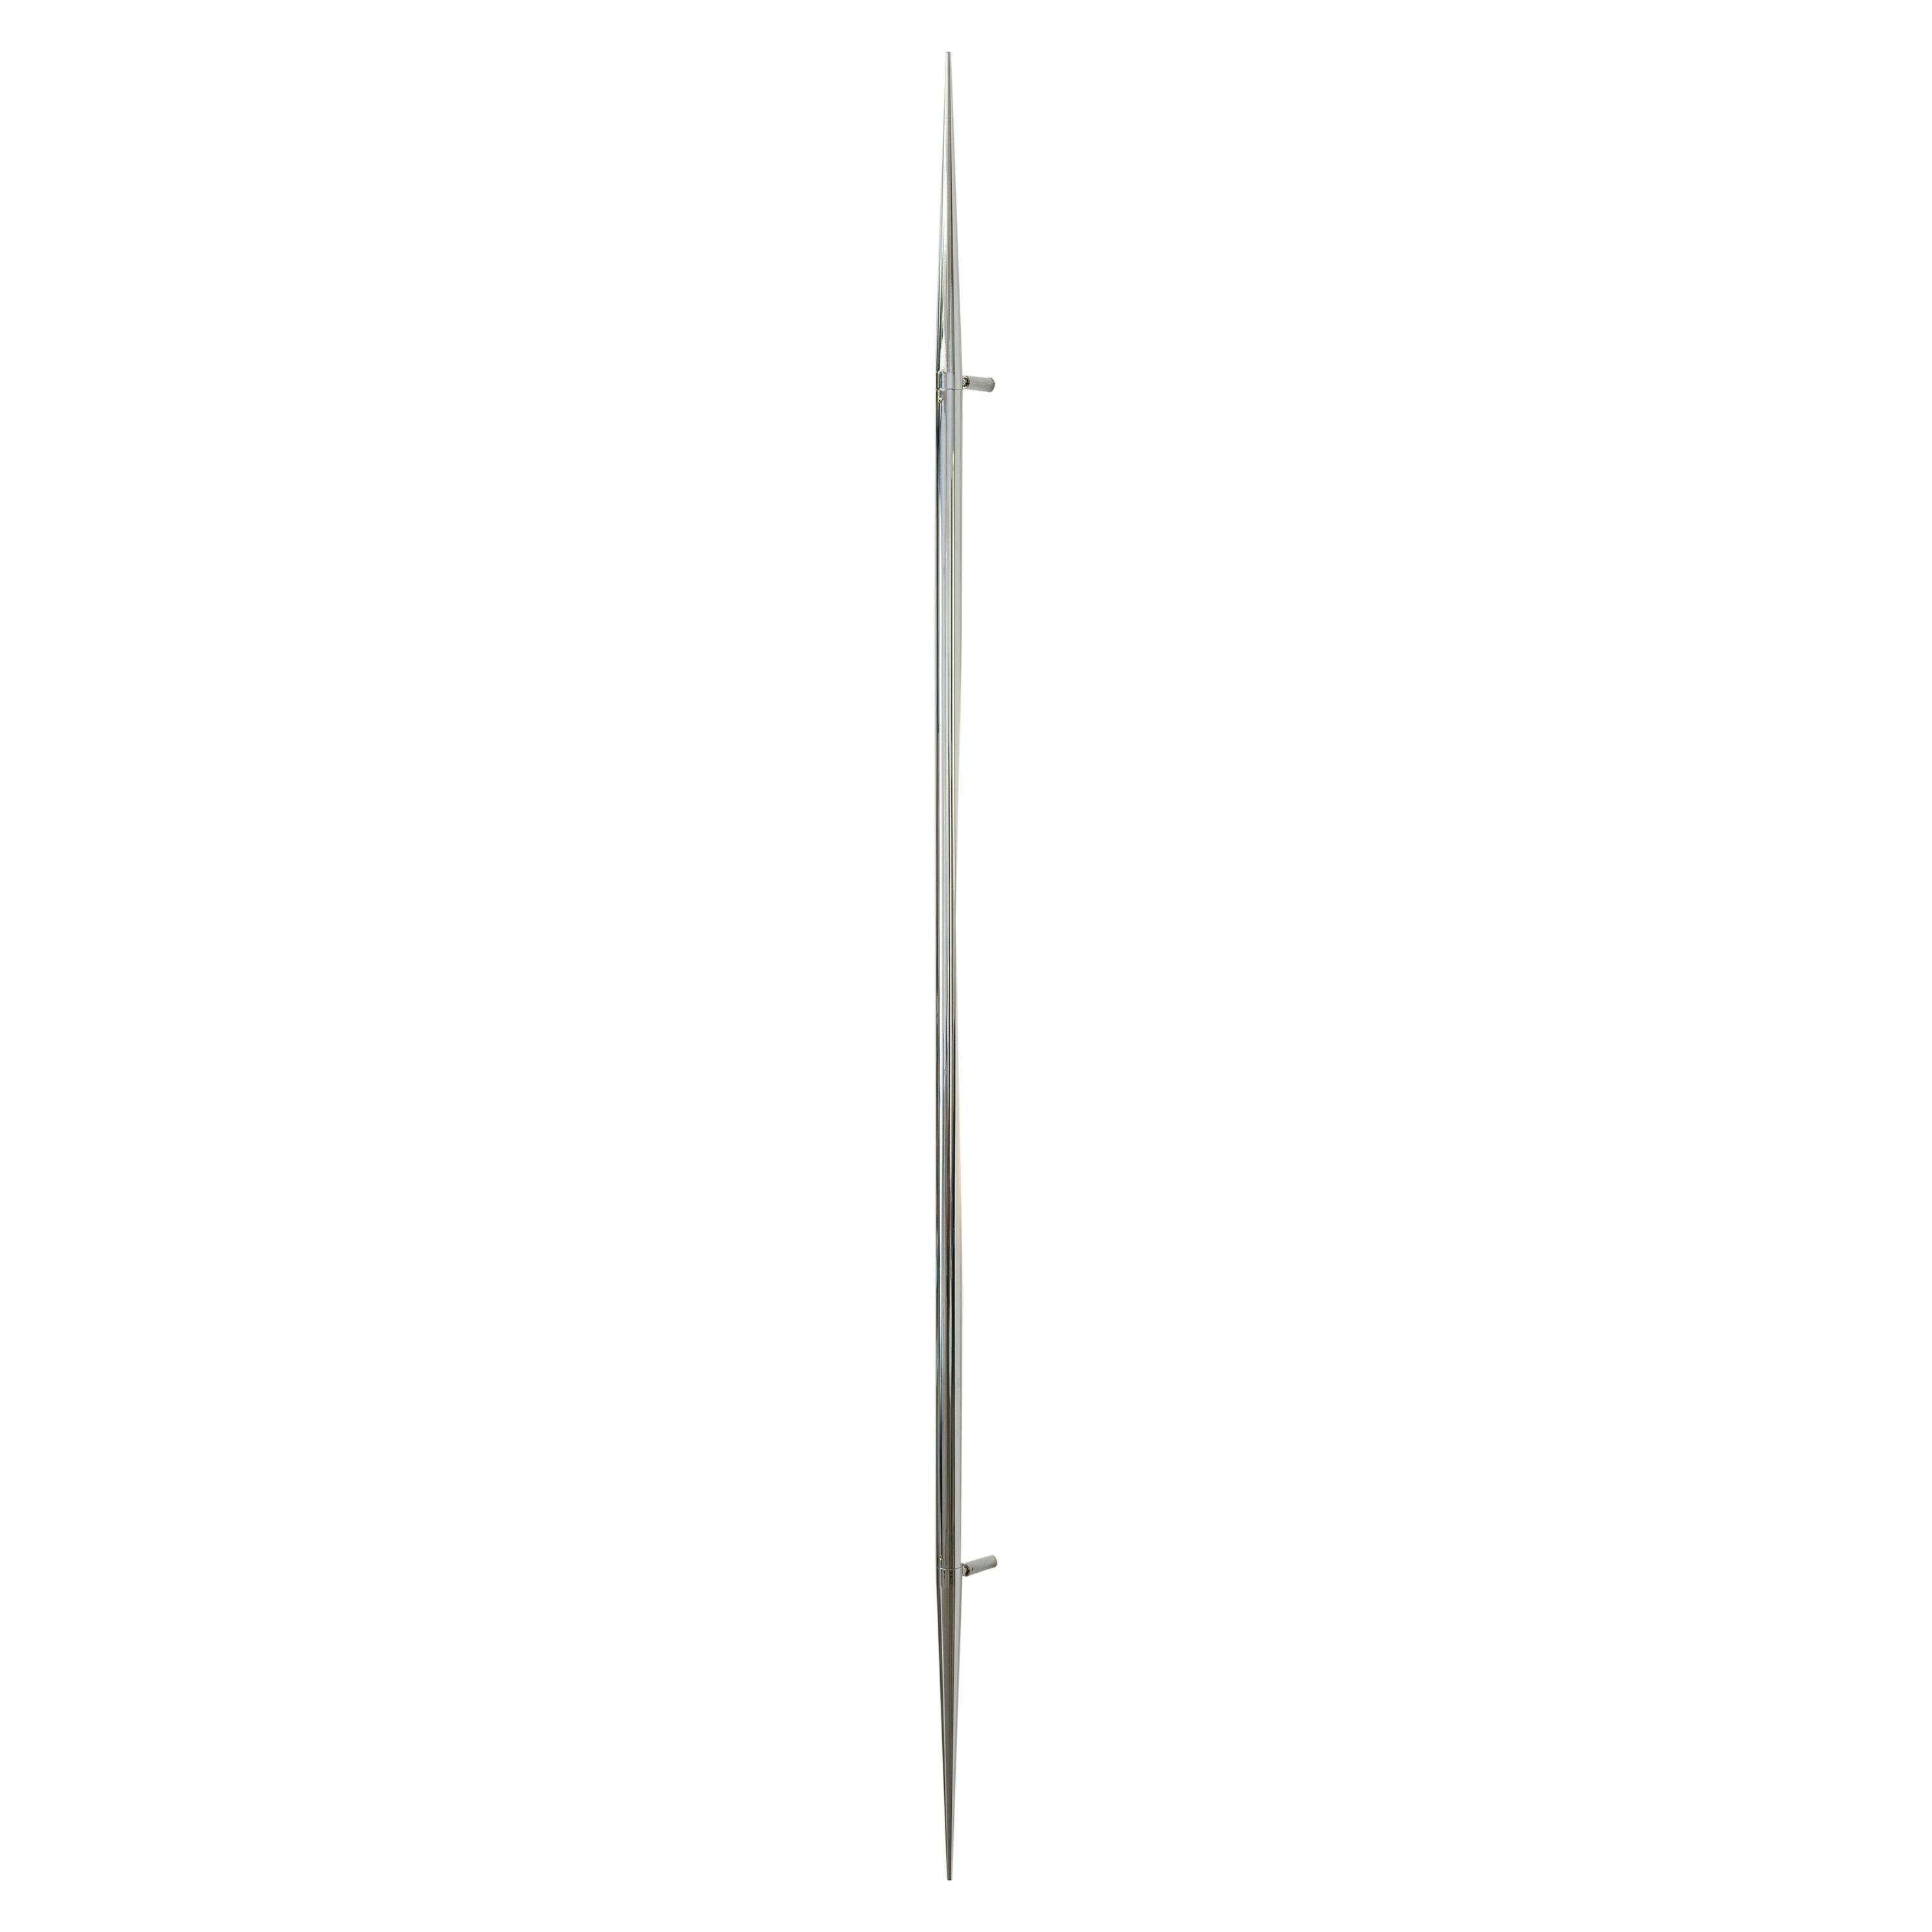 Ferrão Wall Lamp, 180cm, by RAIN, Contemporary Lamp, Aluminium, Chromed For Sale